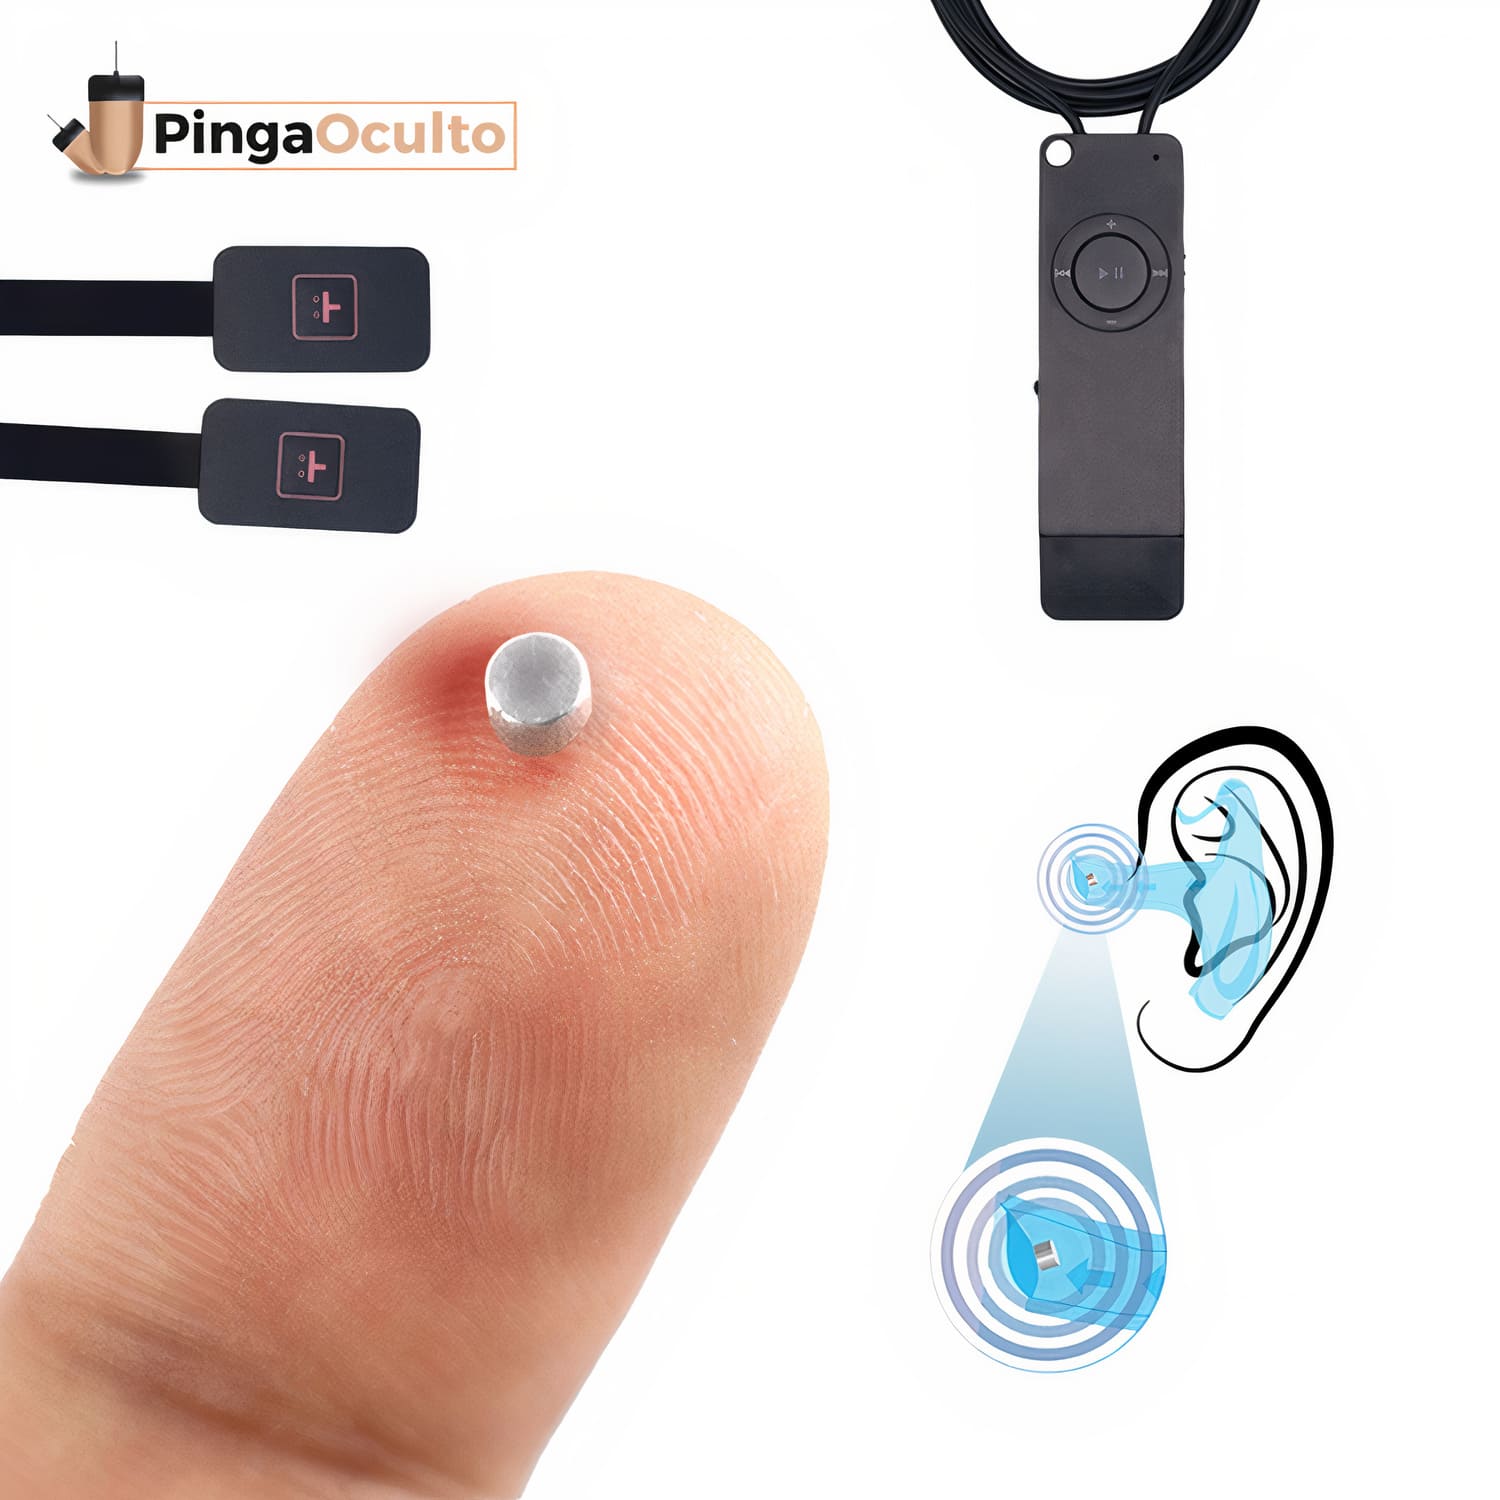 Vip Pro UltraMini Bluetooth earpiece - PingaOculto ®